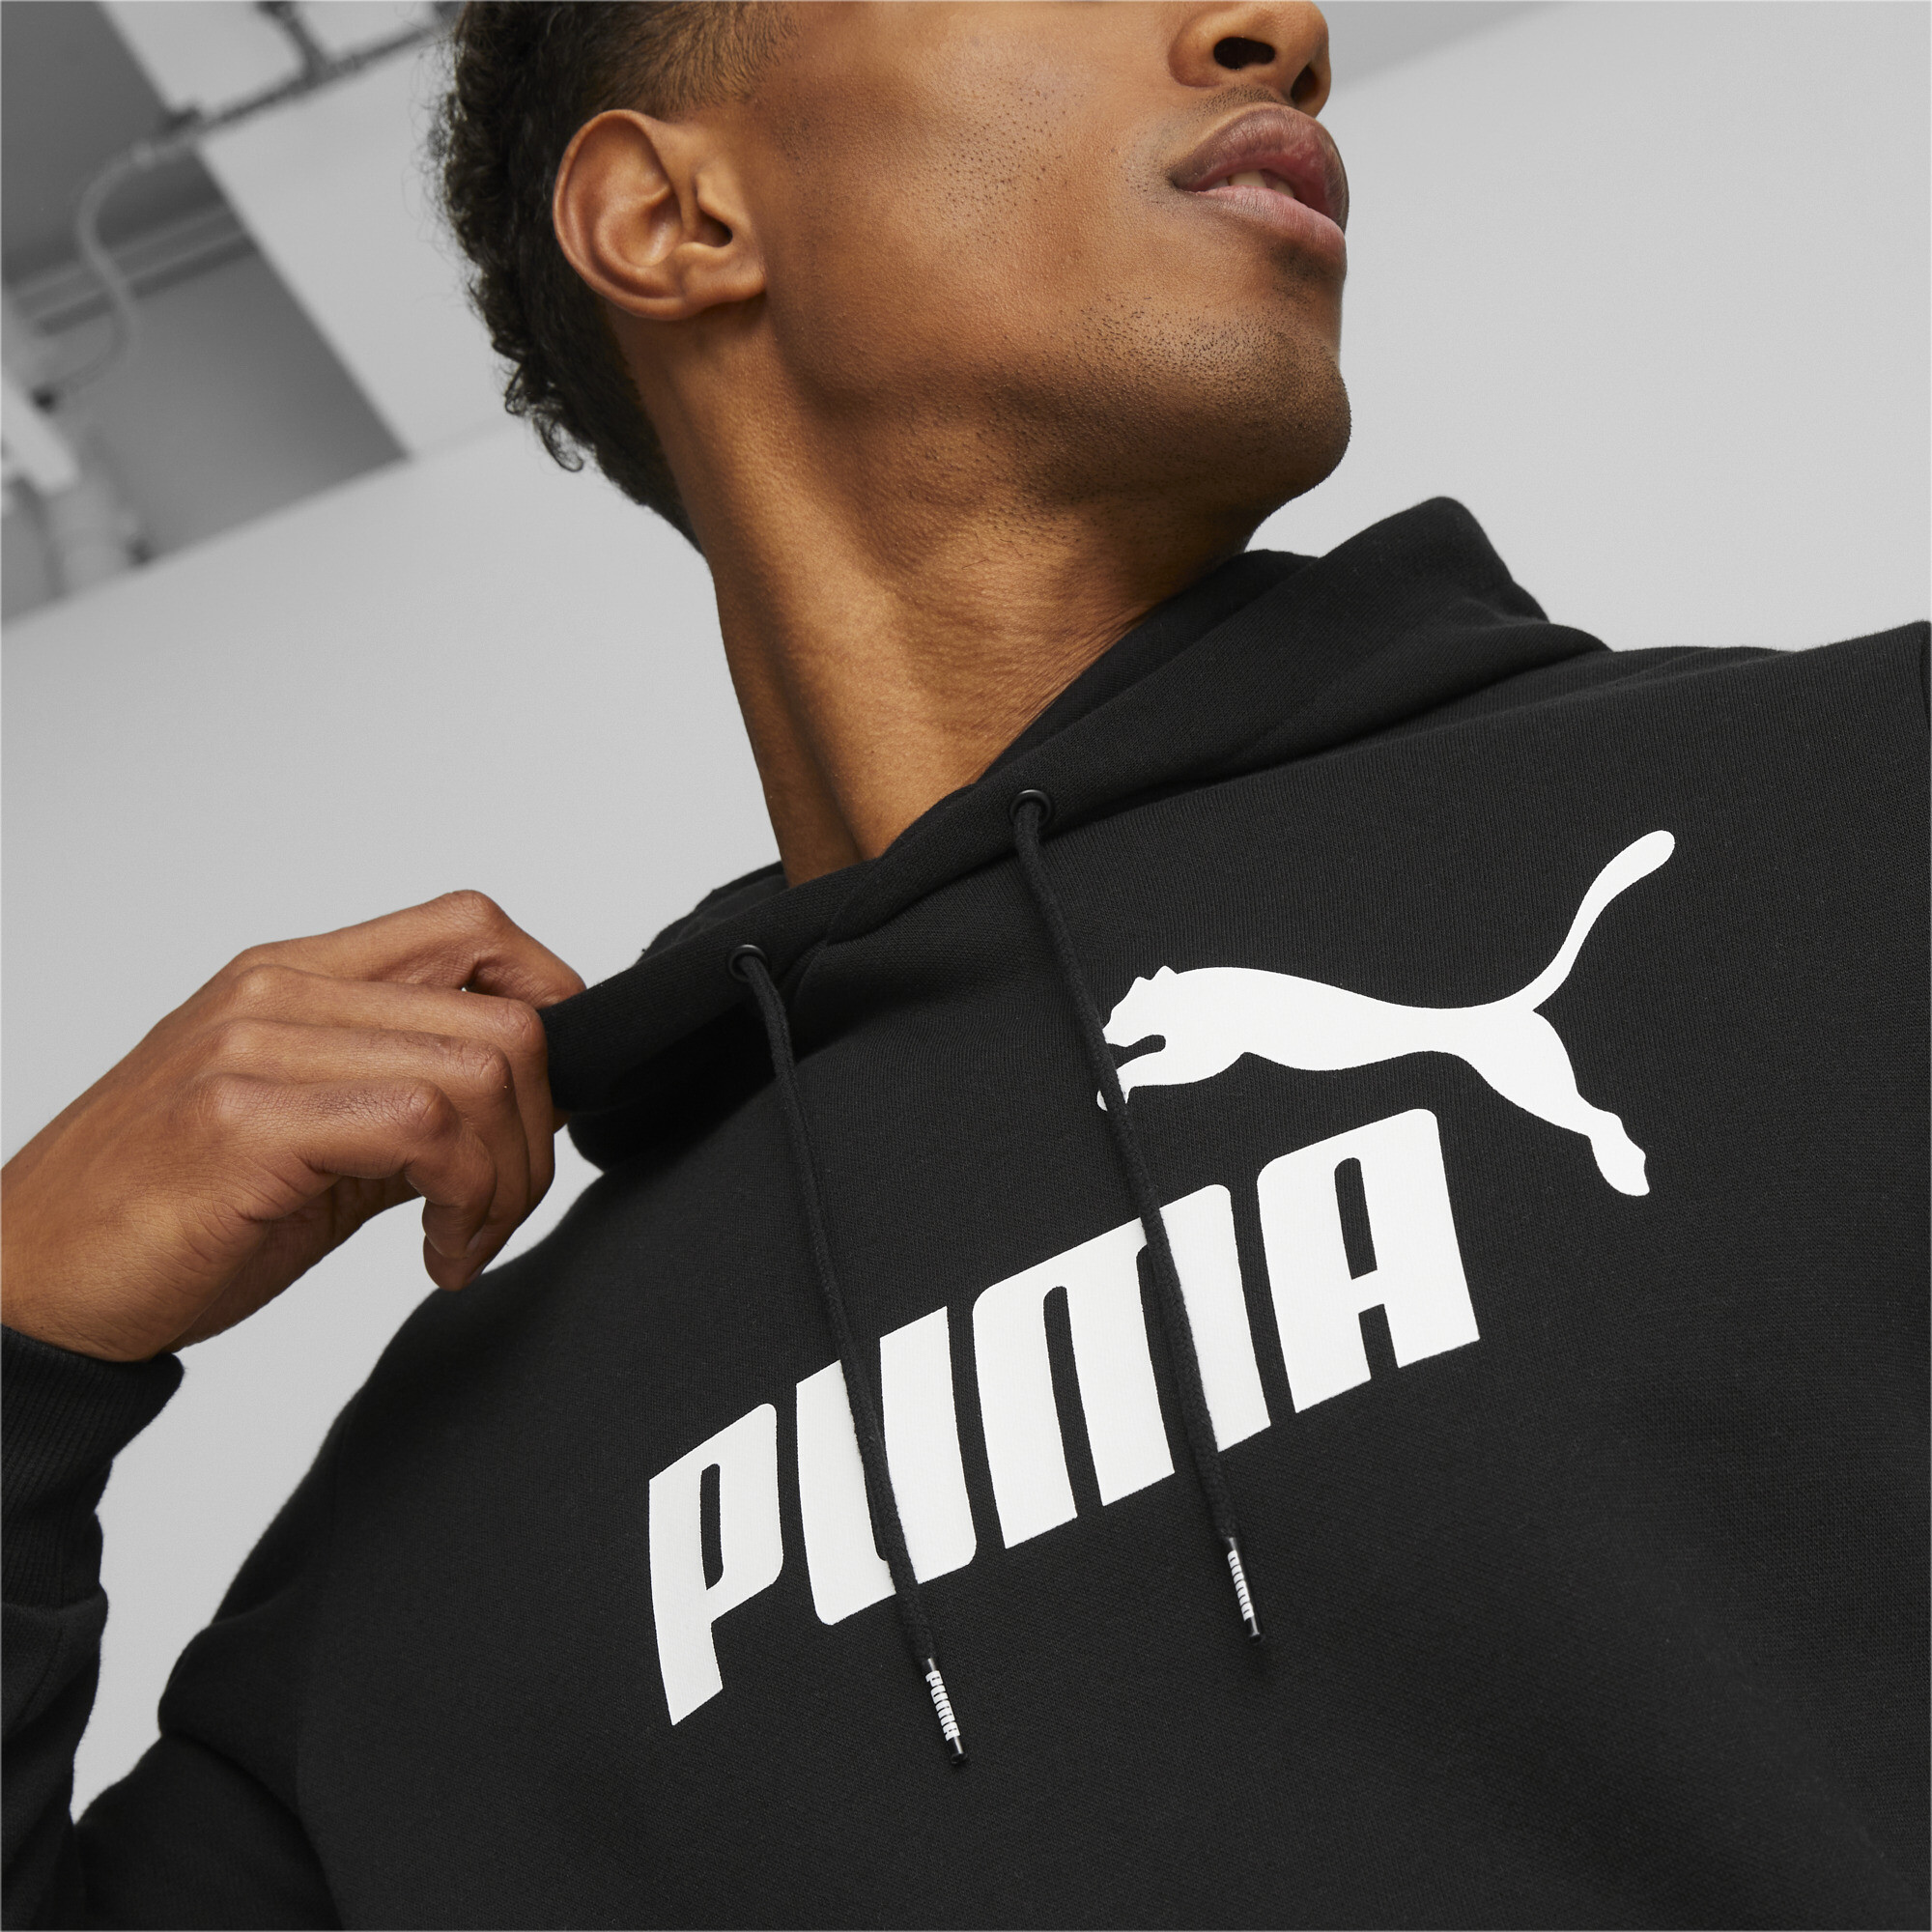 Men's Puma Essentials Big Logo Hoodie, Black, Size M, Clothing